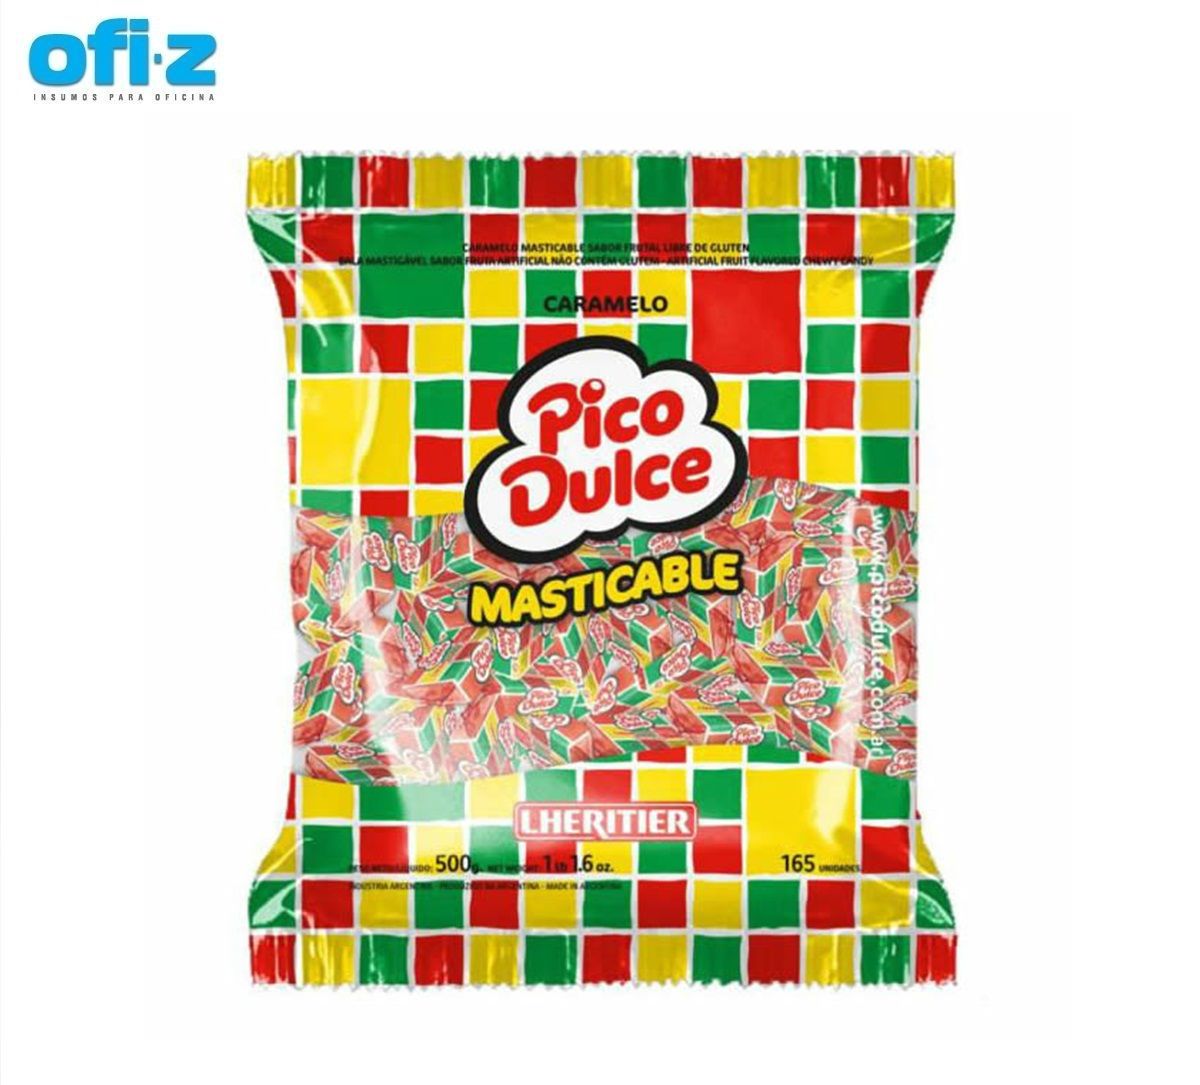 Caramelo Pico dulce frutal 450G